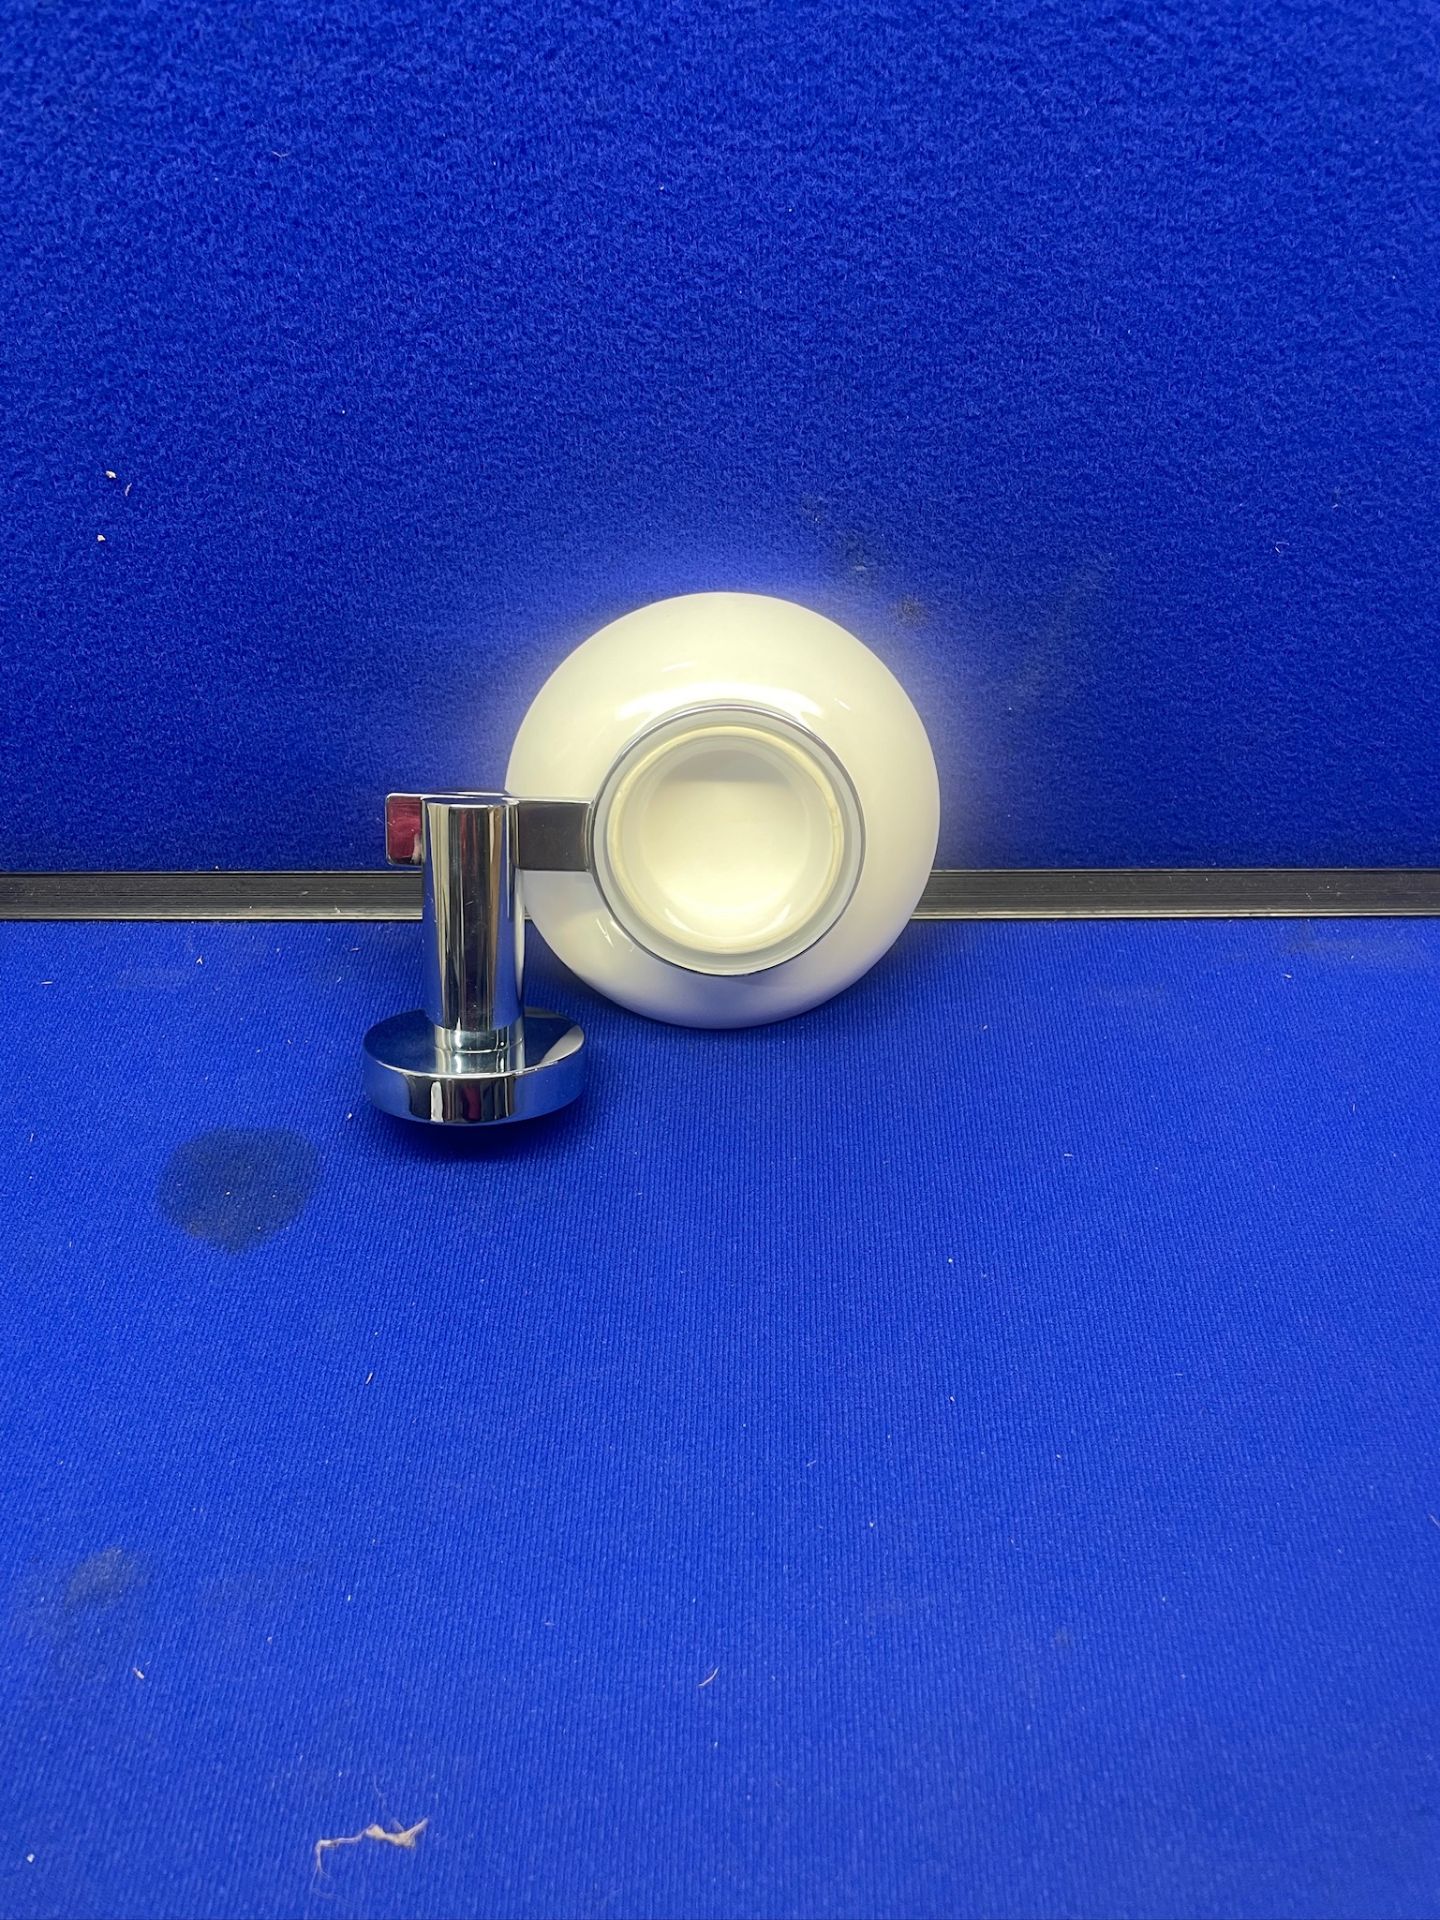 11 x Croydex Soap Dish Holder - Image 2 of 3